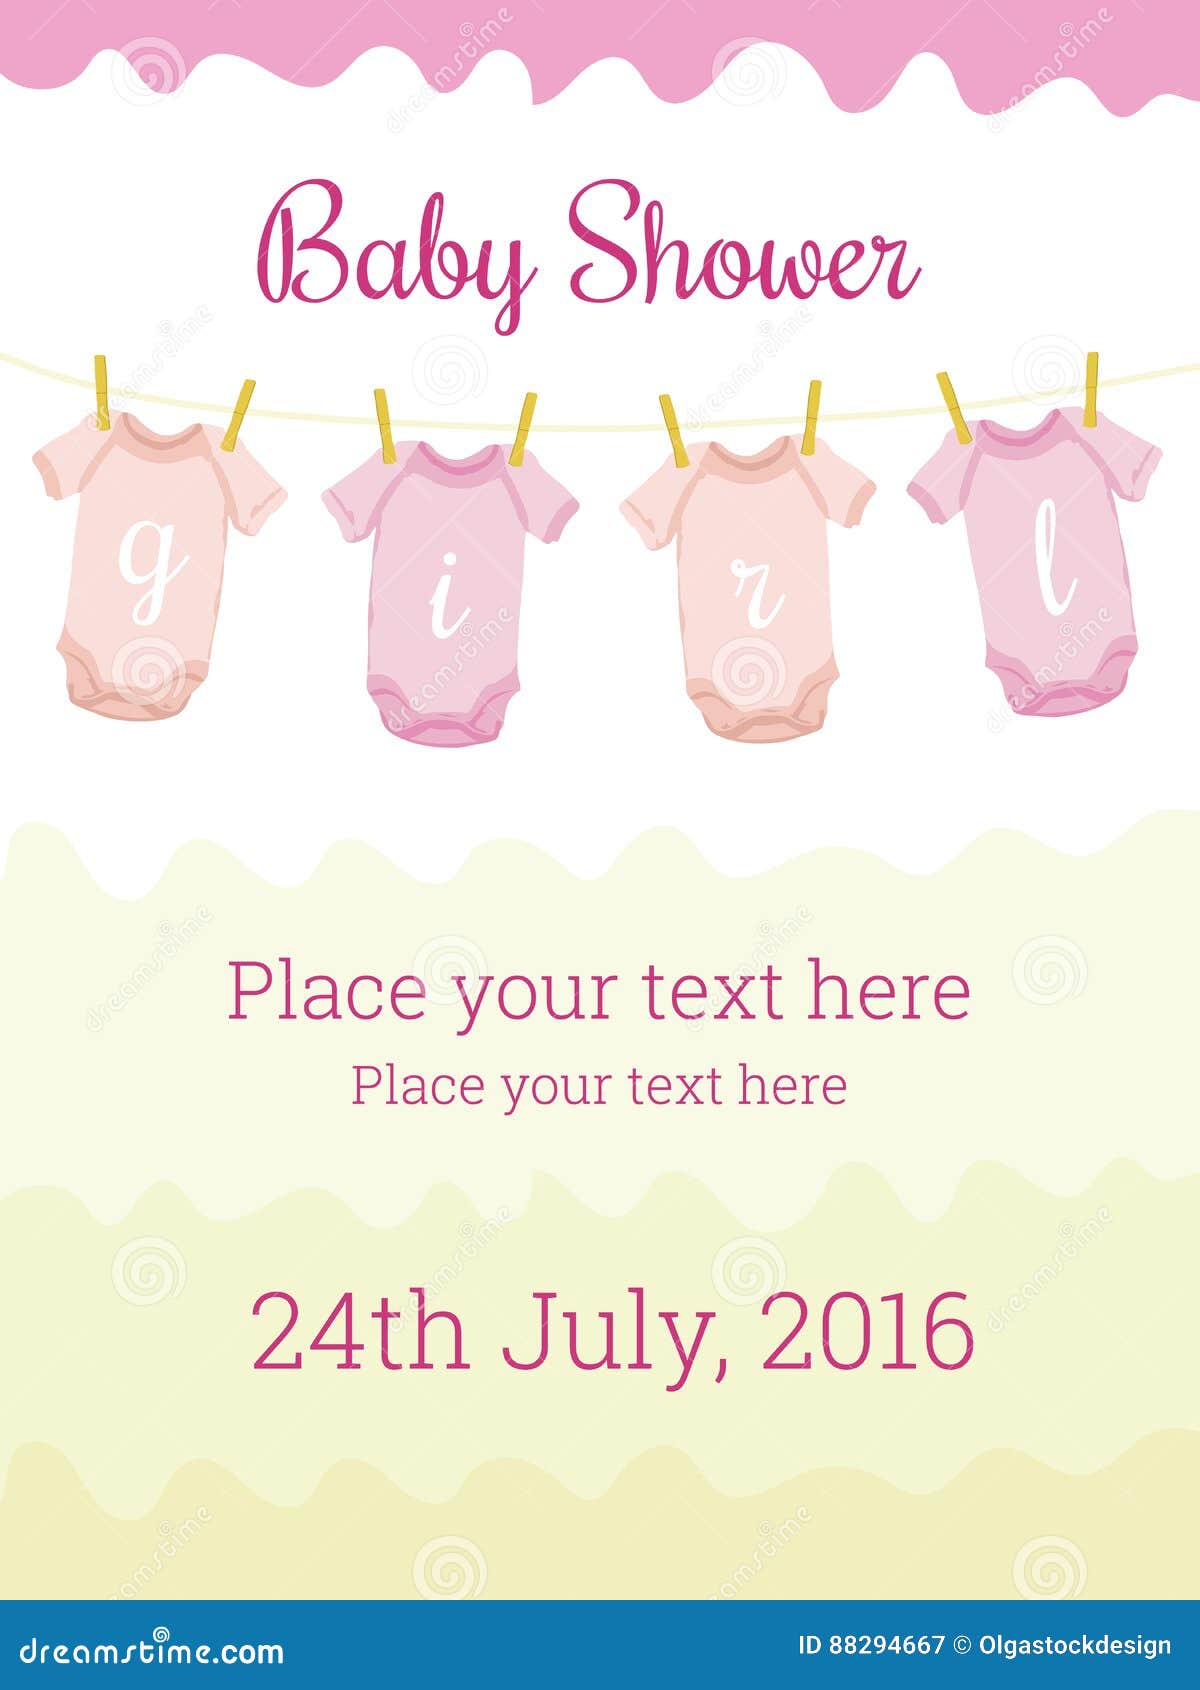 Baby Shower Invitation Card Template for Baby Girl Stock Vector Regarding Baby Shower Flyer Template